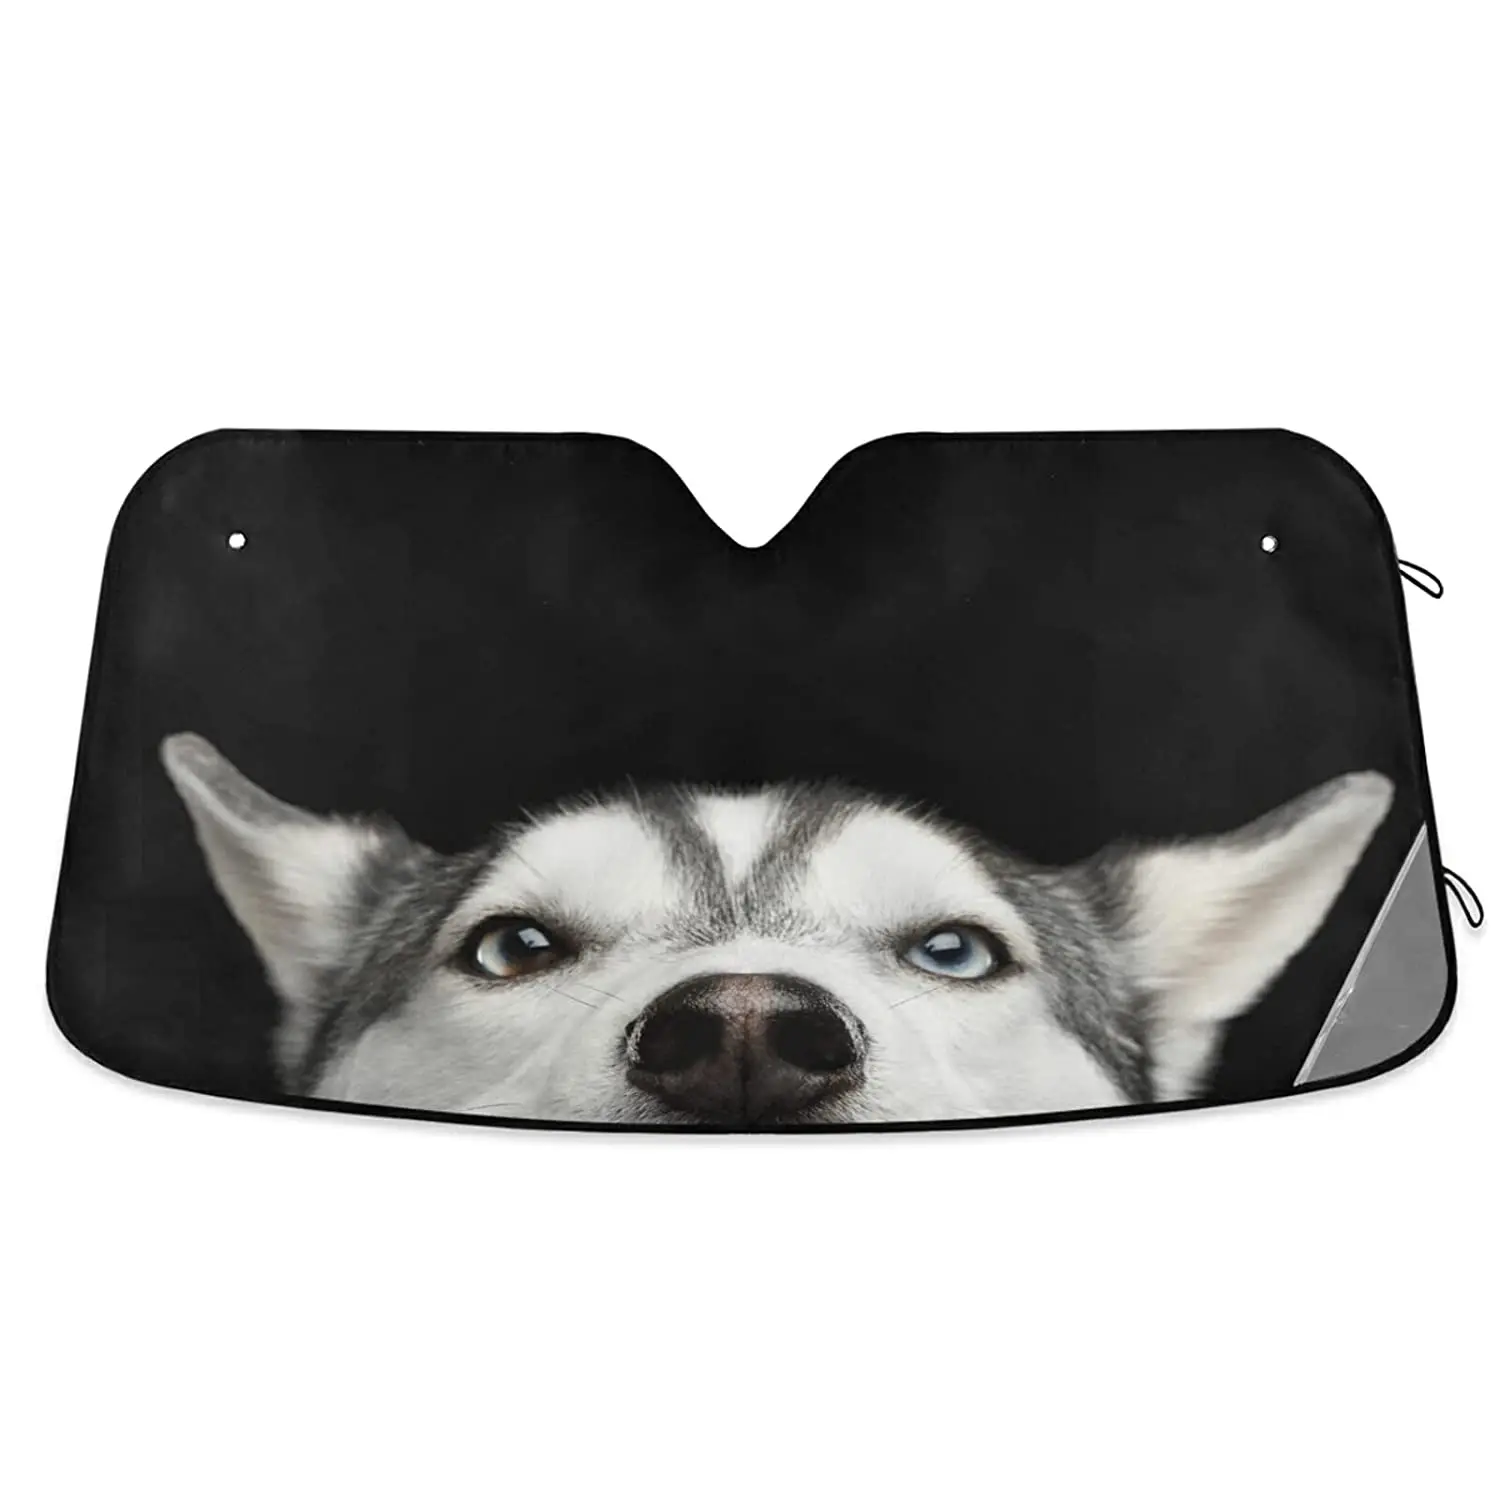 

Blue Eyes Husky Dog Car Sunshade UV Sun Protection Foldable Sunshade Protects Car From Sun Heat Best UV